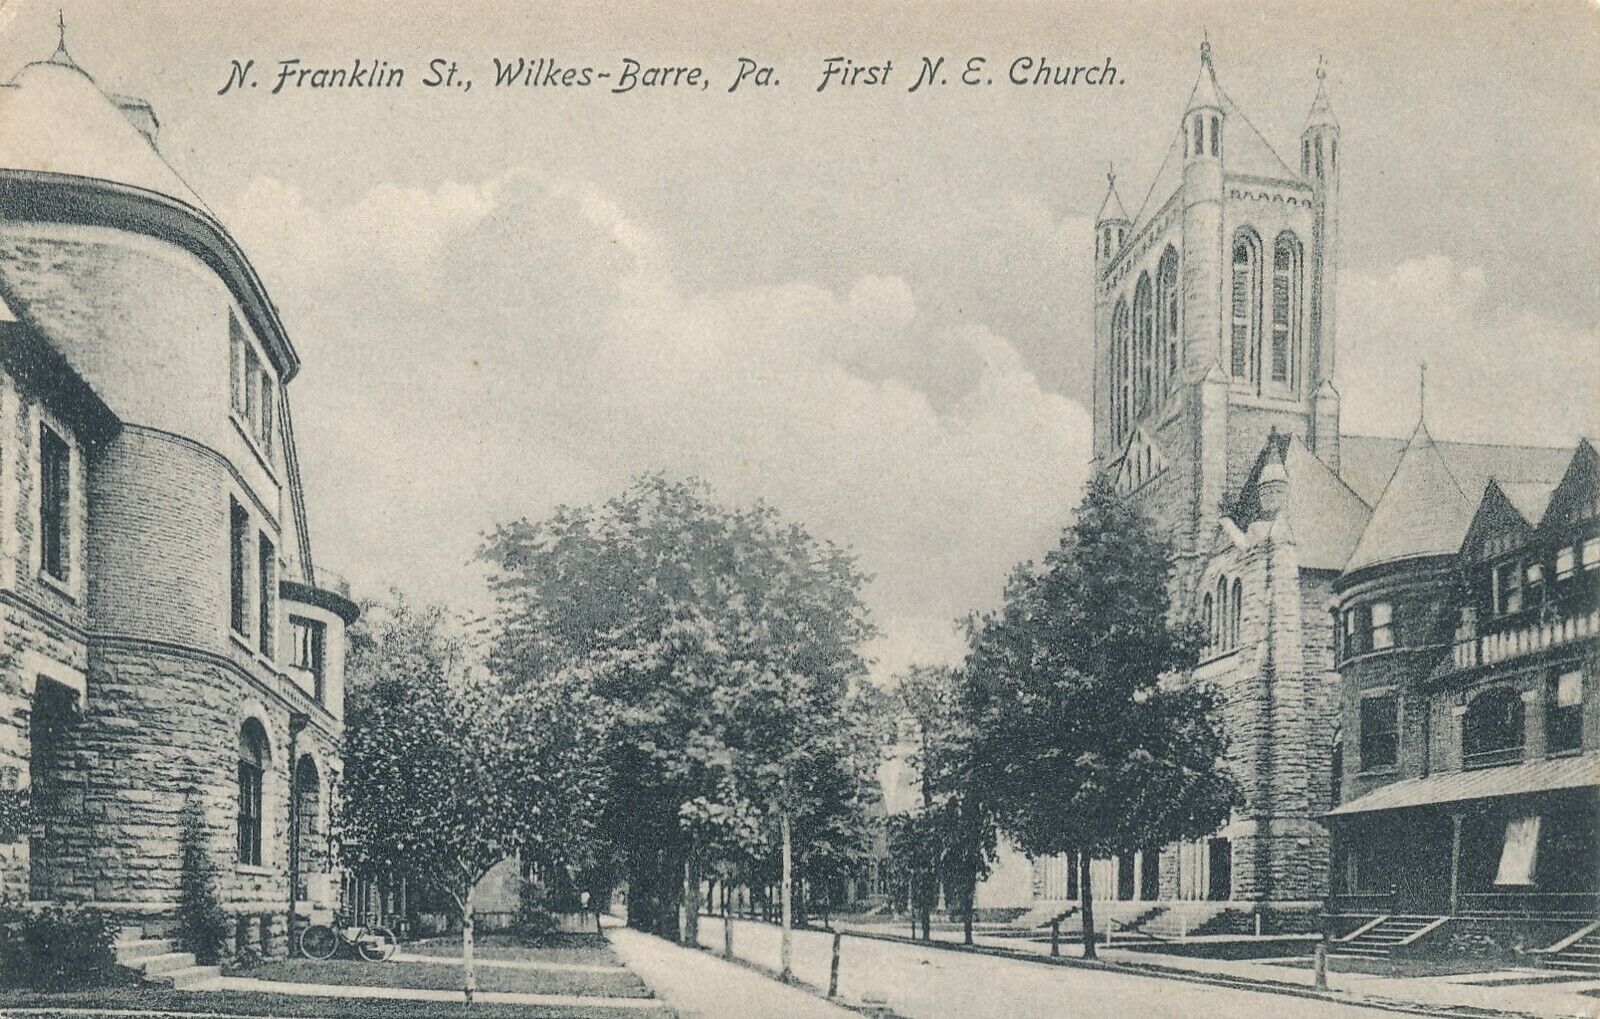 WILKES-BARRE PA – North Franklin Street First M.E. Church - udb (pre 1908)